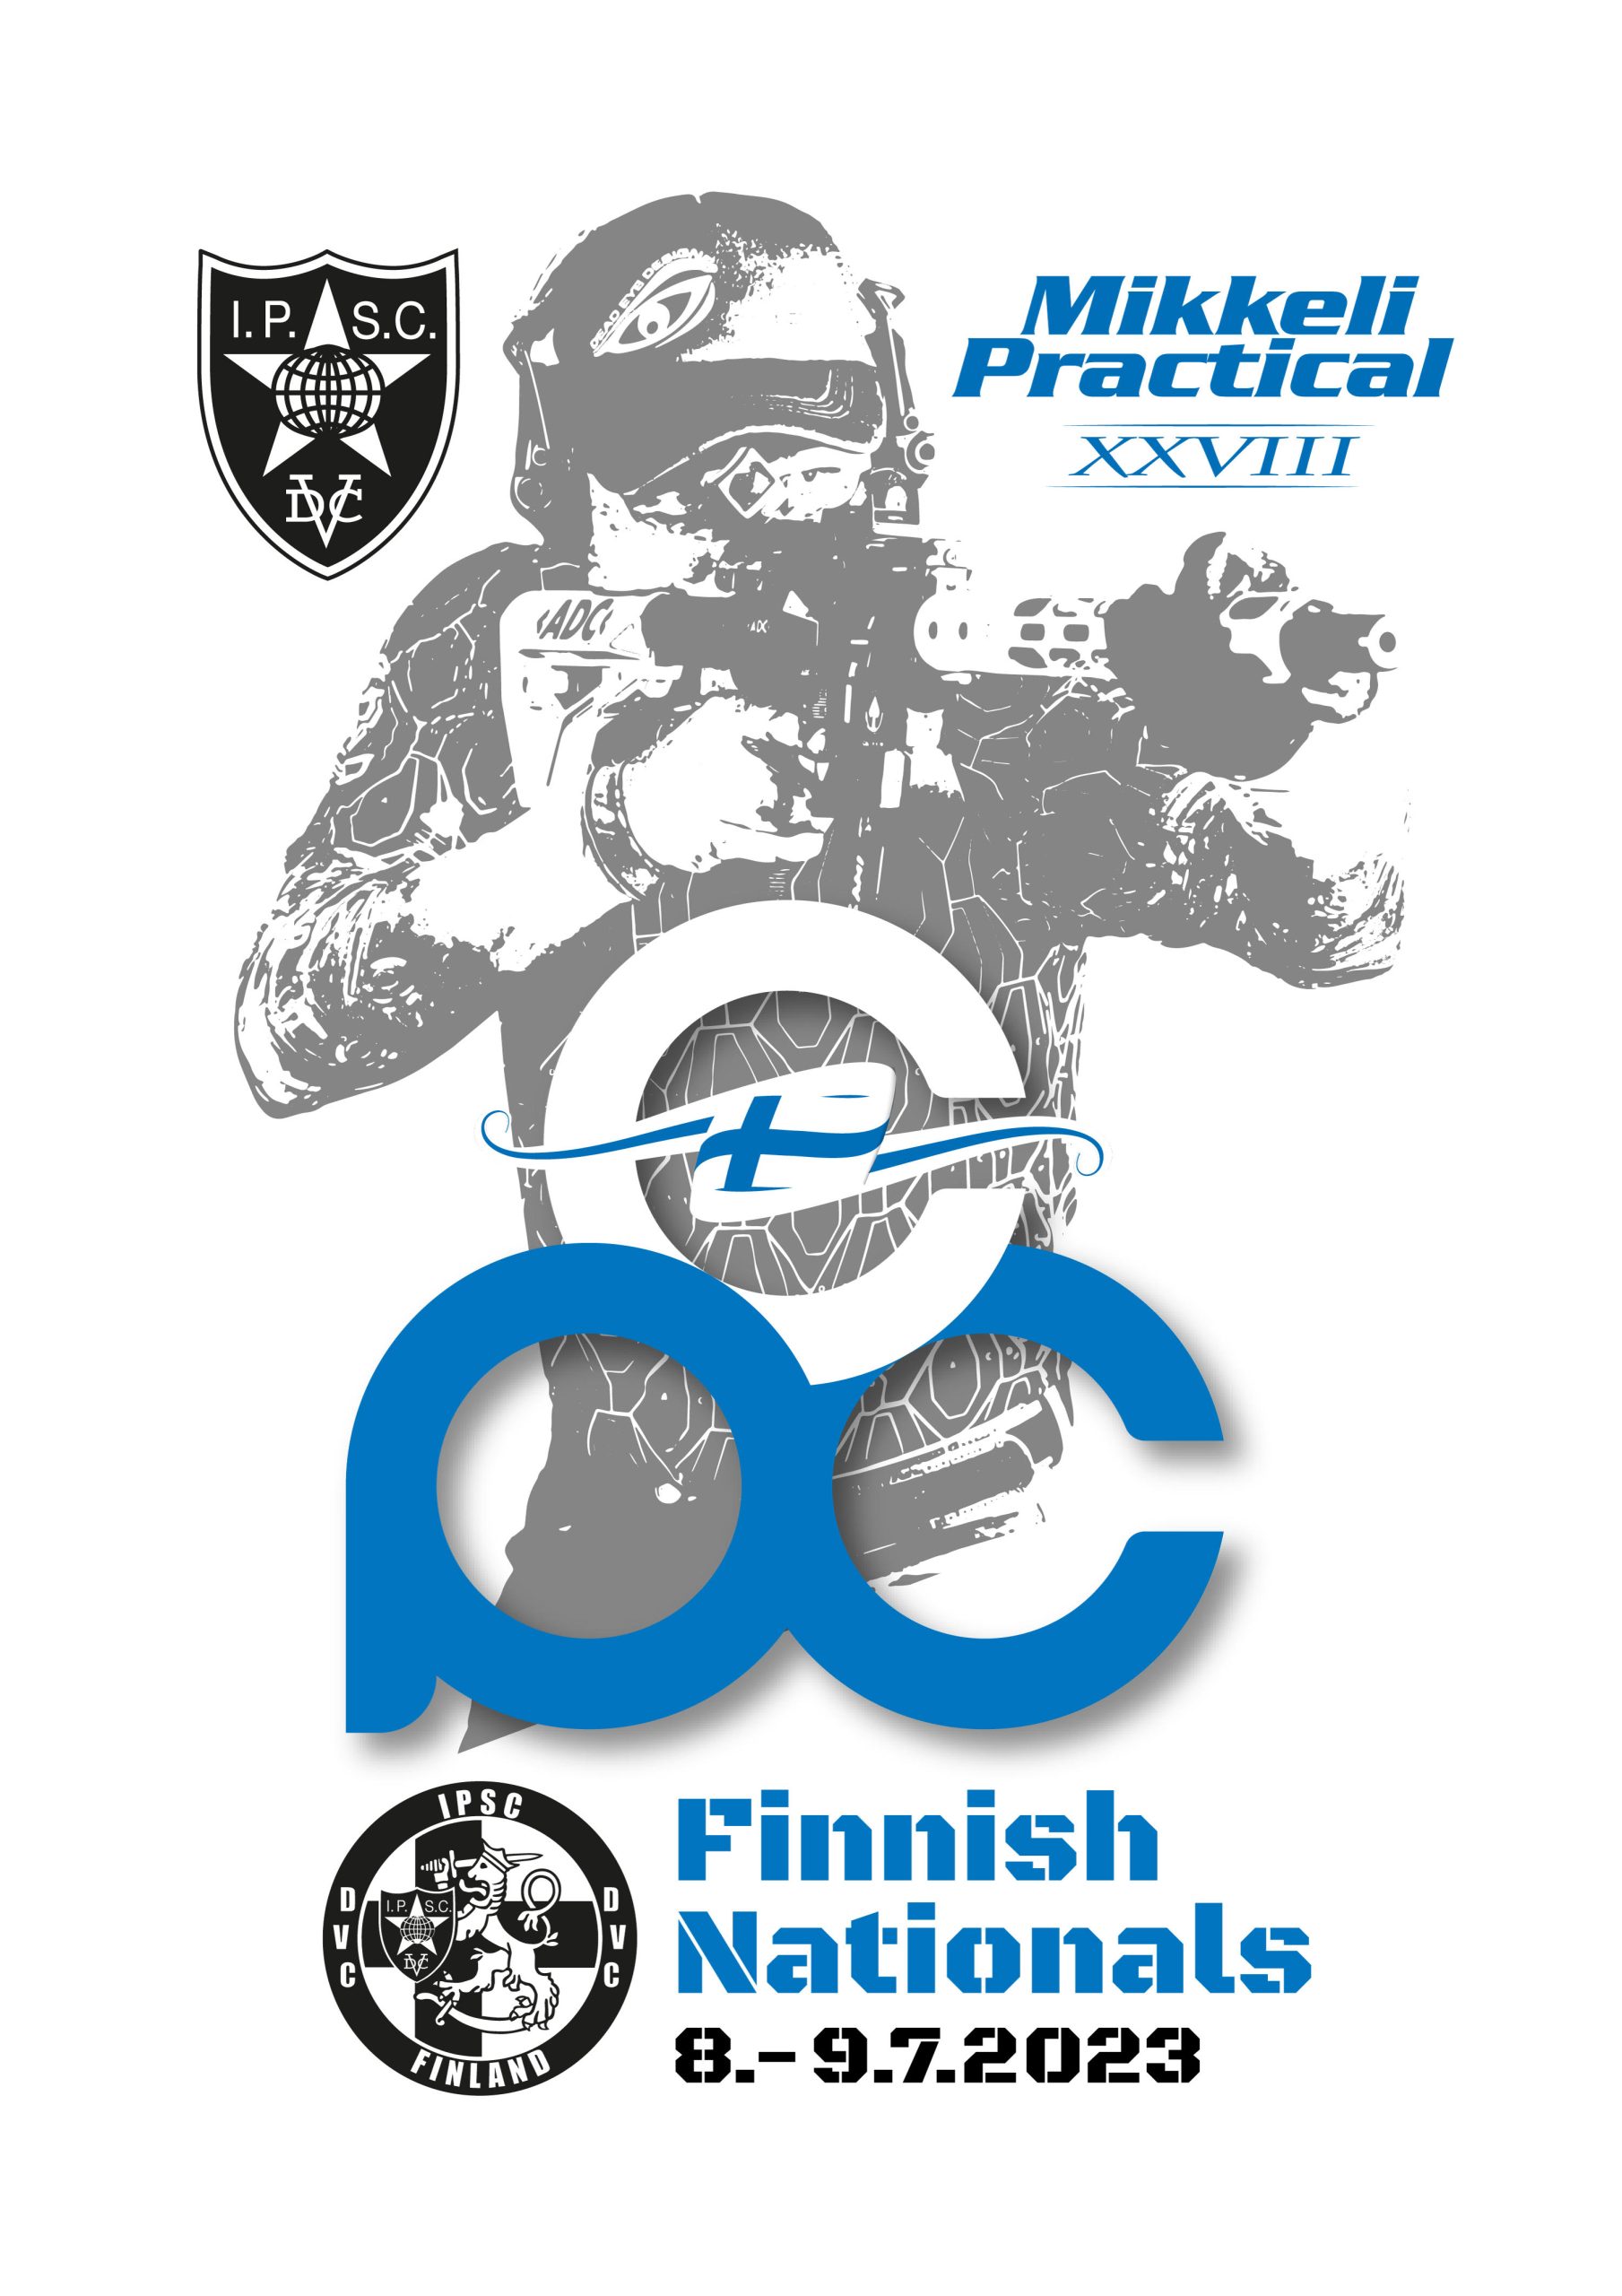 Mikkeli Practical XXVIII - PCC Finnish Nationals